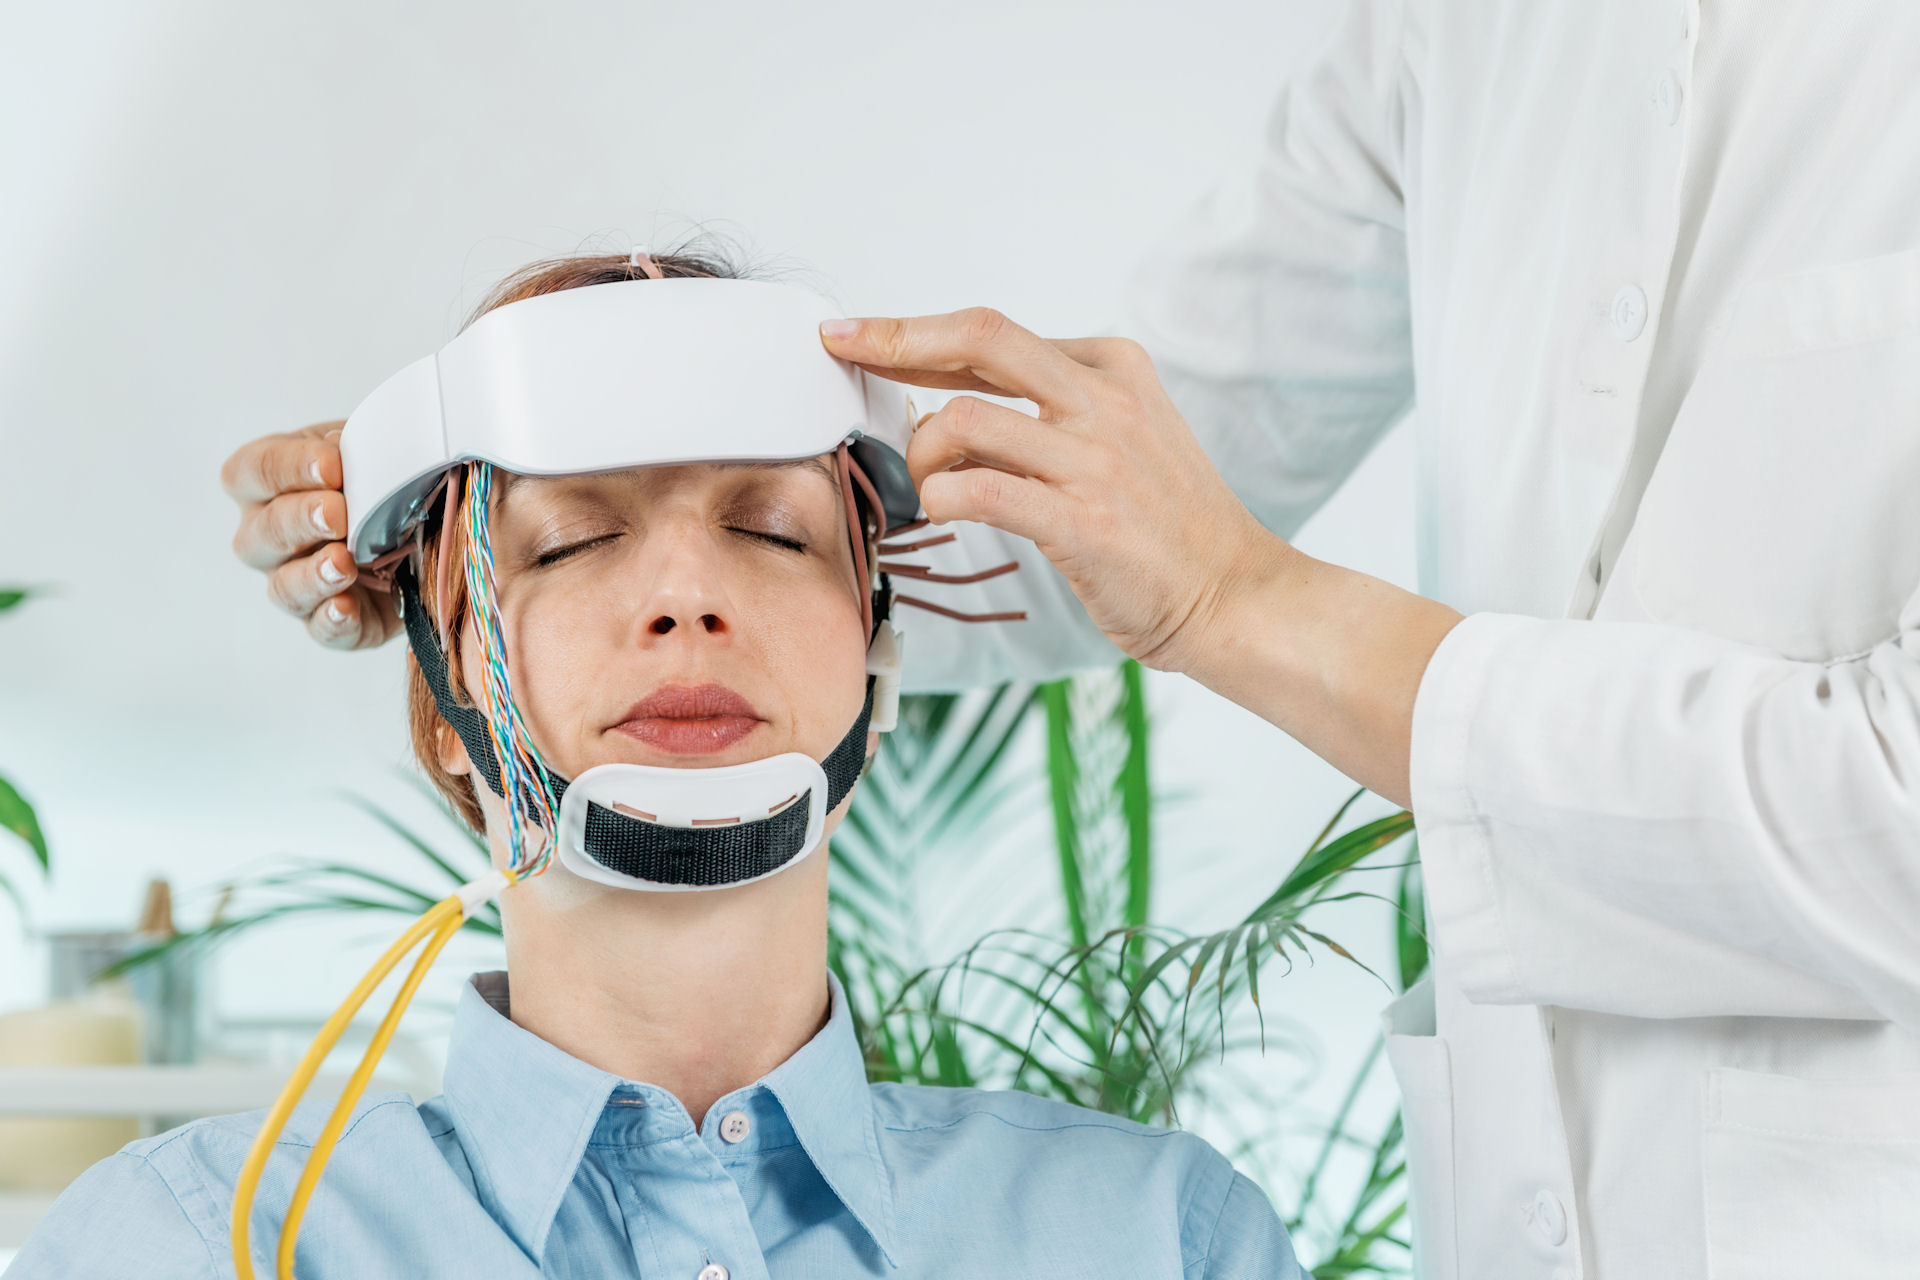 brainwave therapy